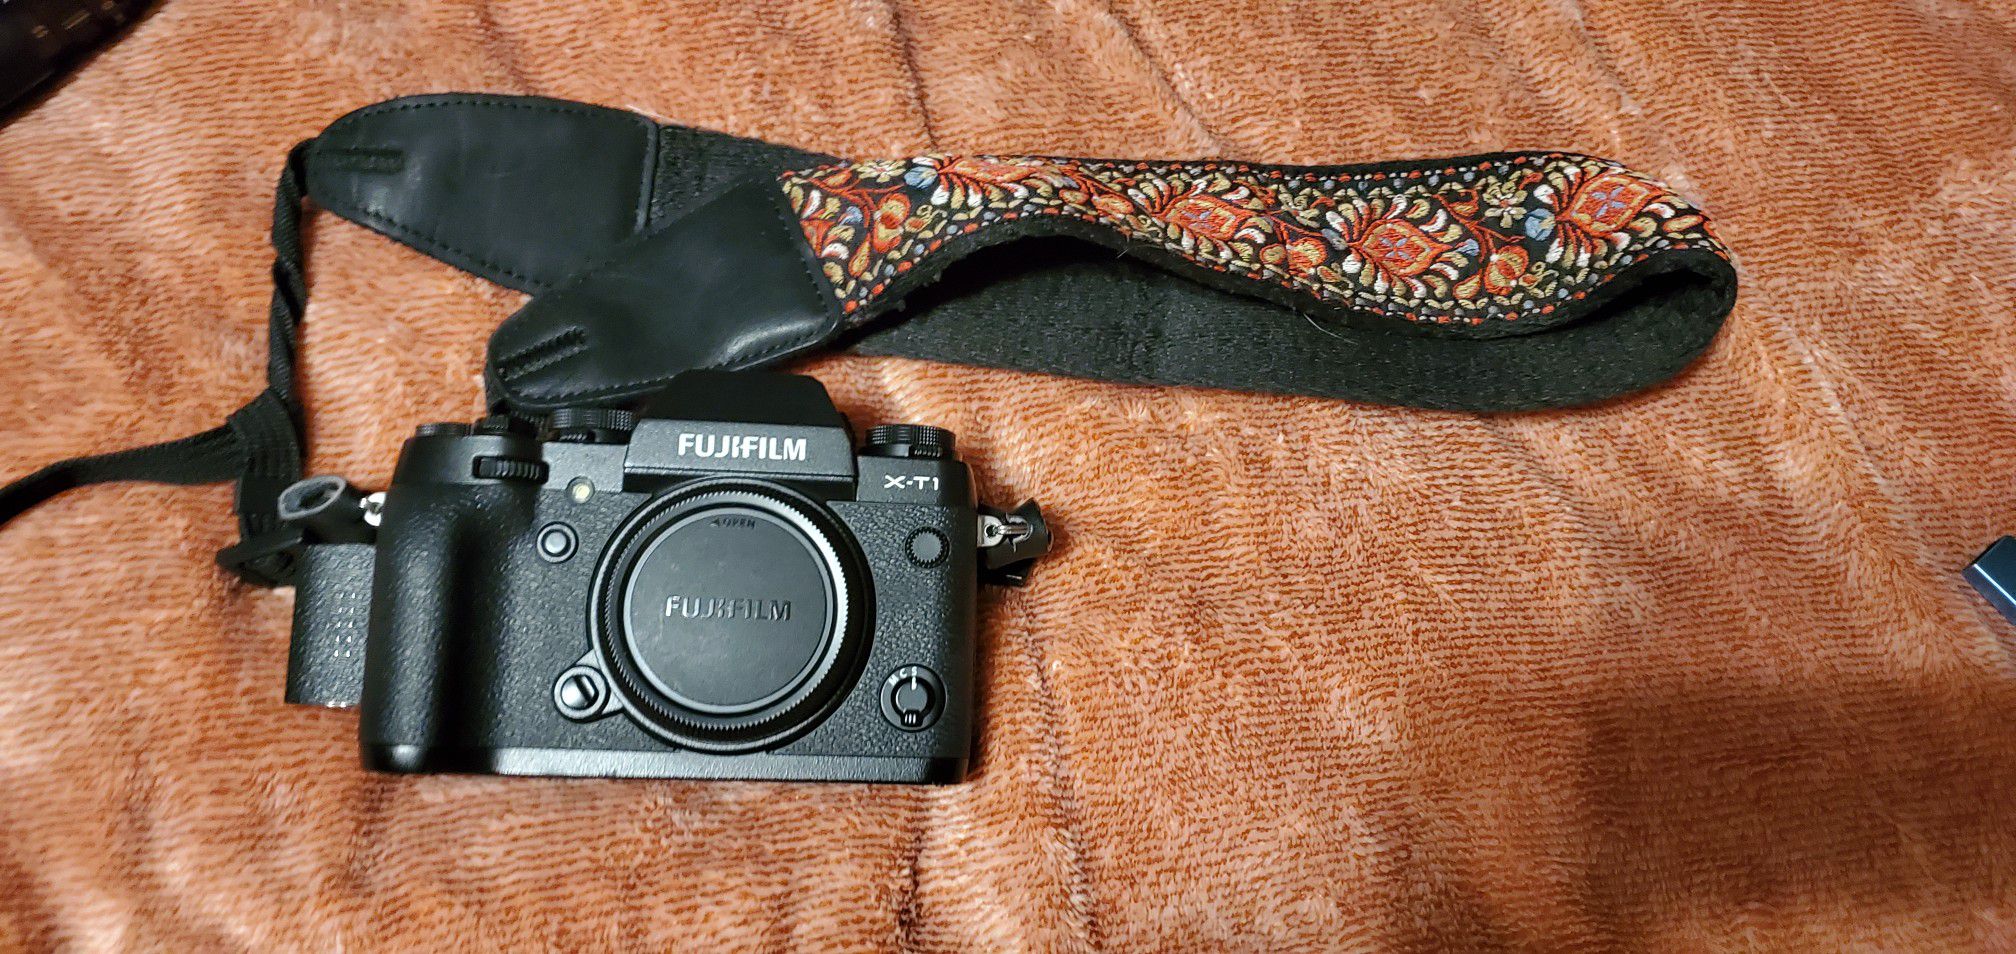 Fujifilm XT1 with 35mm lens